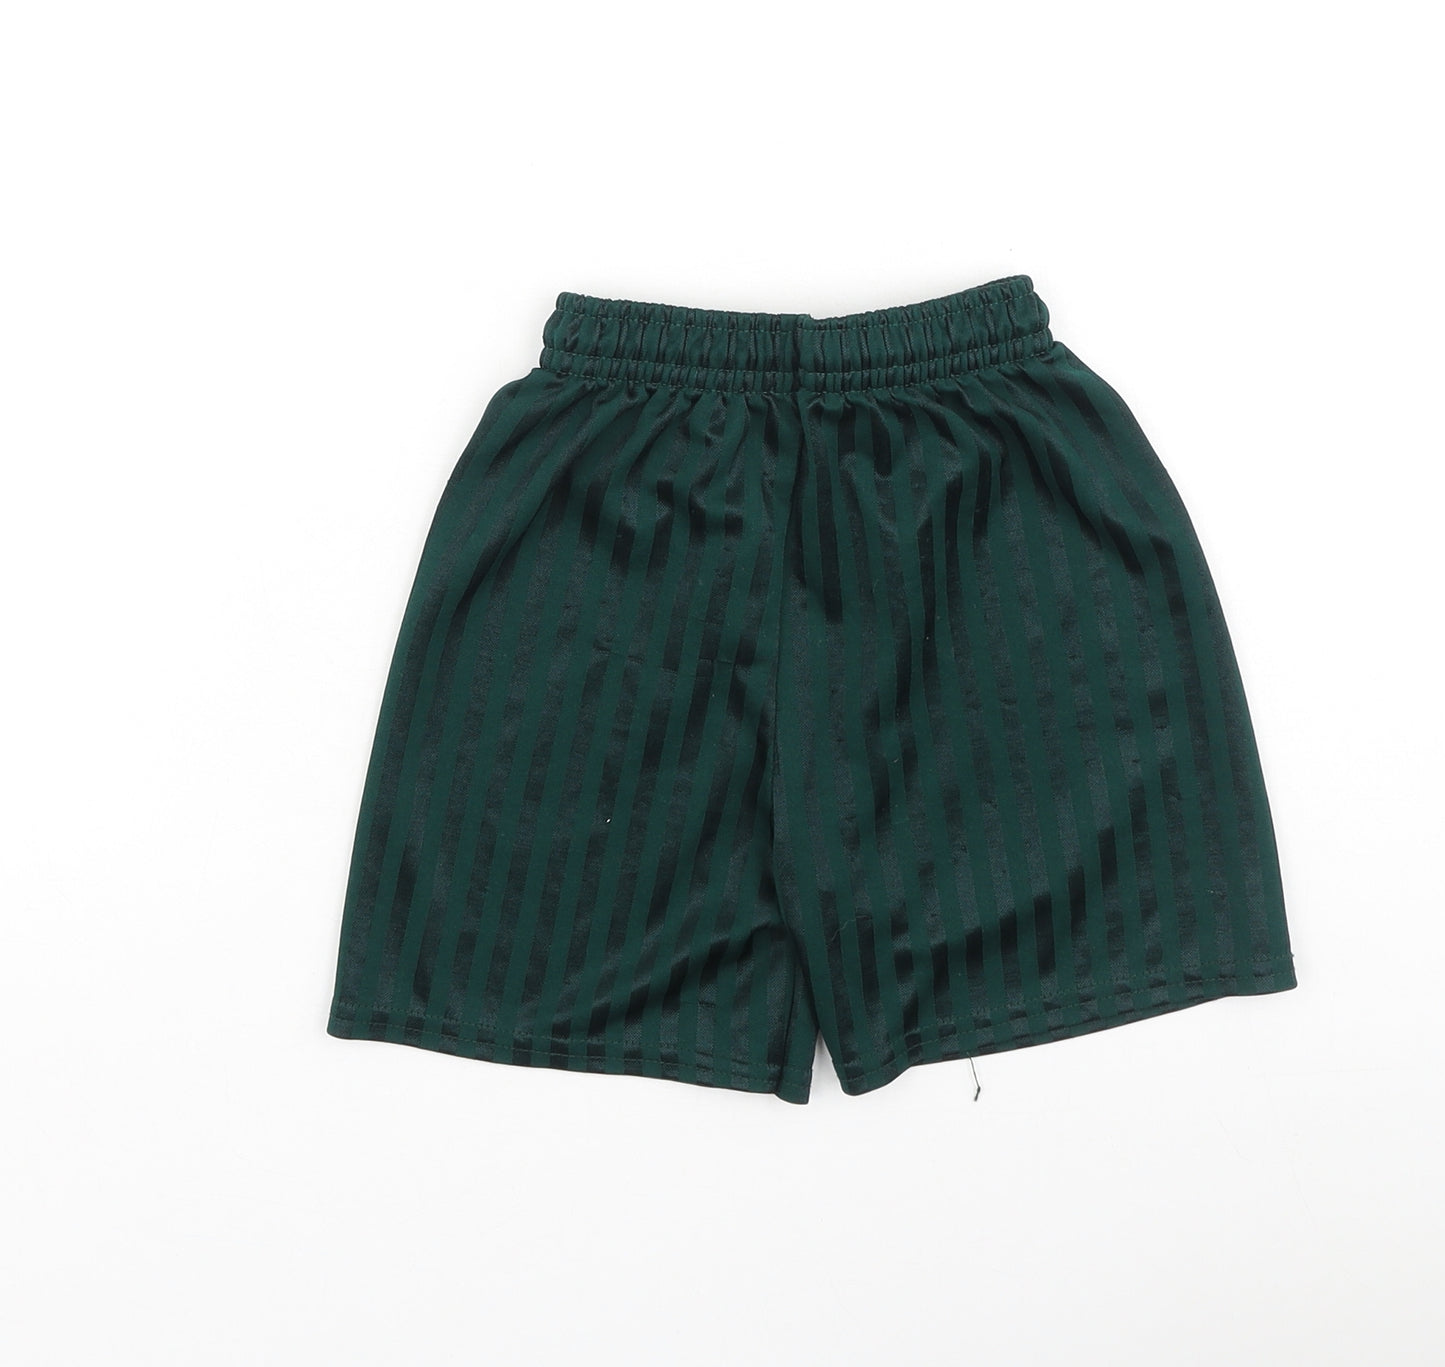 Preworn Boys Green  Polyester Sweat Shorts Size 4-5 Years  Regular